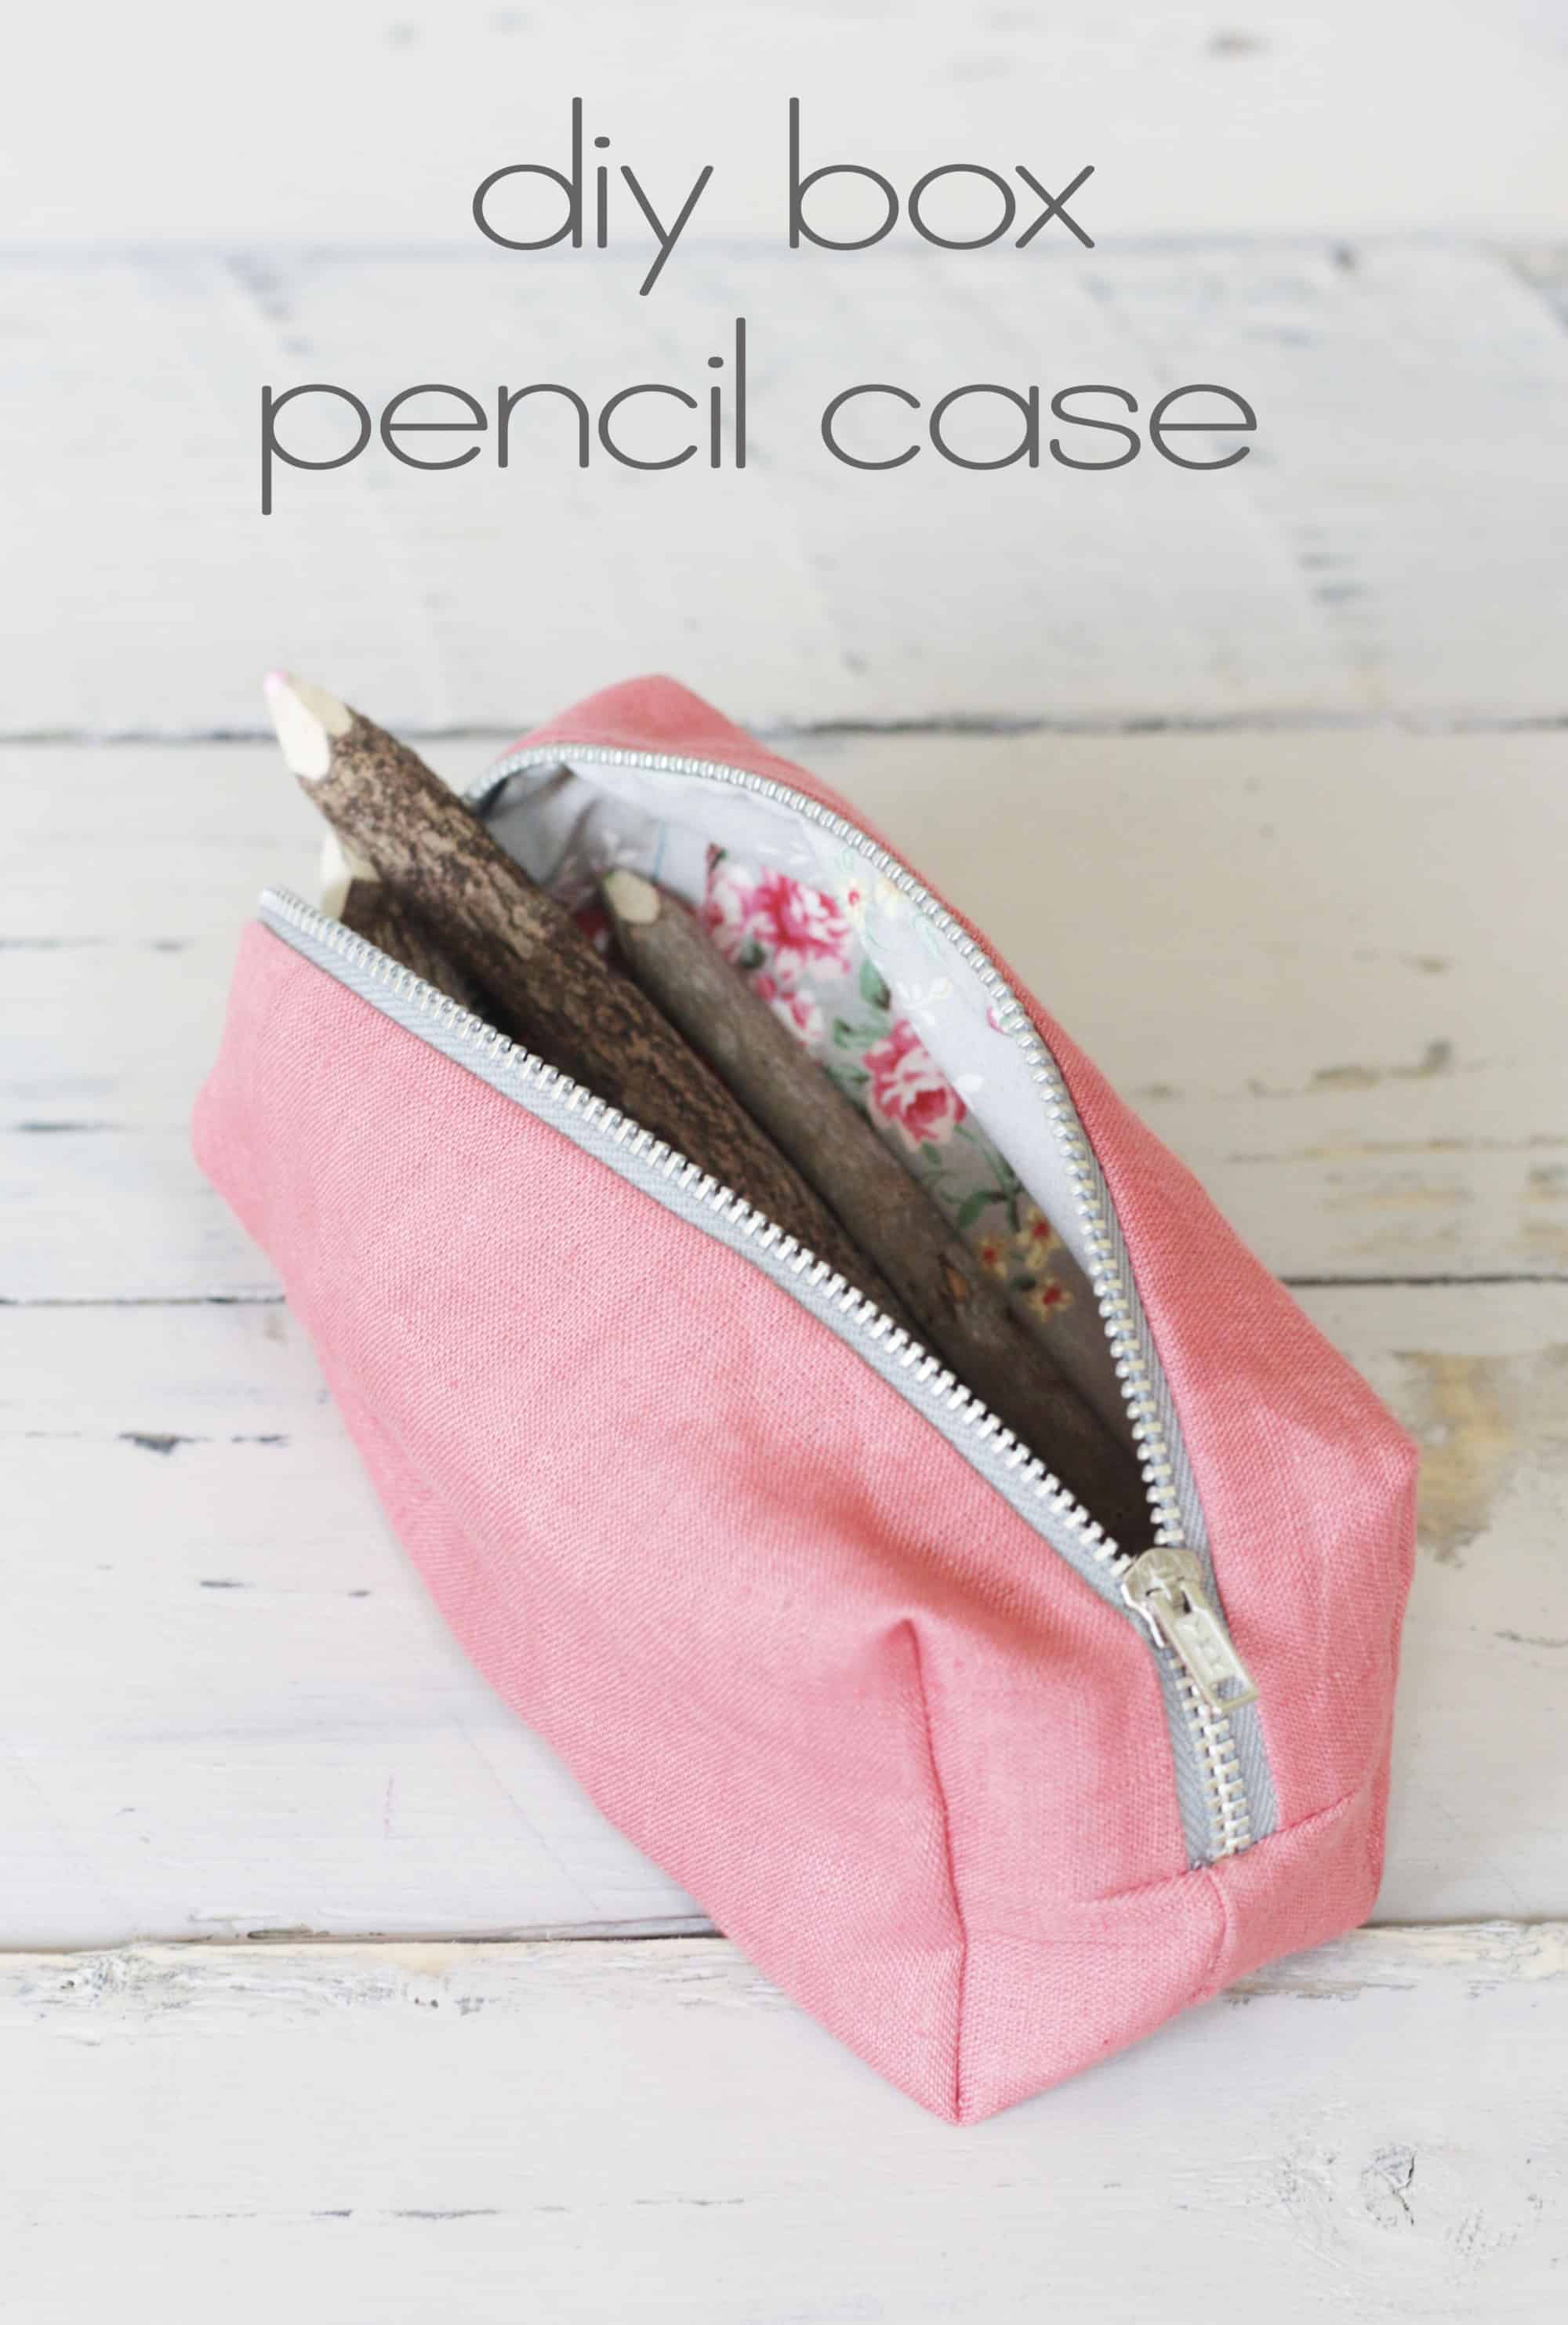 12 DIY PENCIL CASE IDEAS YOU WILL LOVE - Back To School 